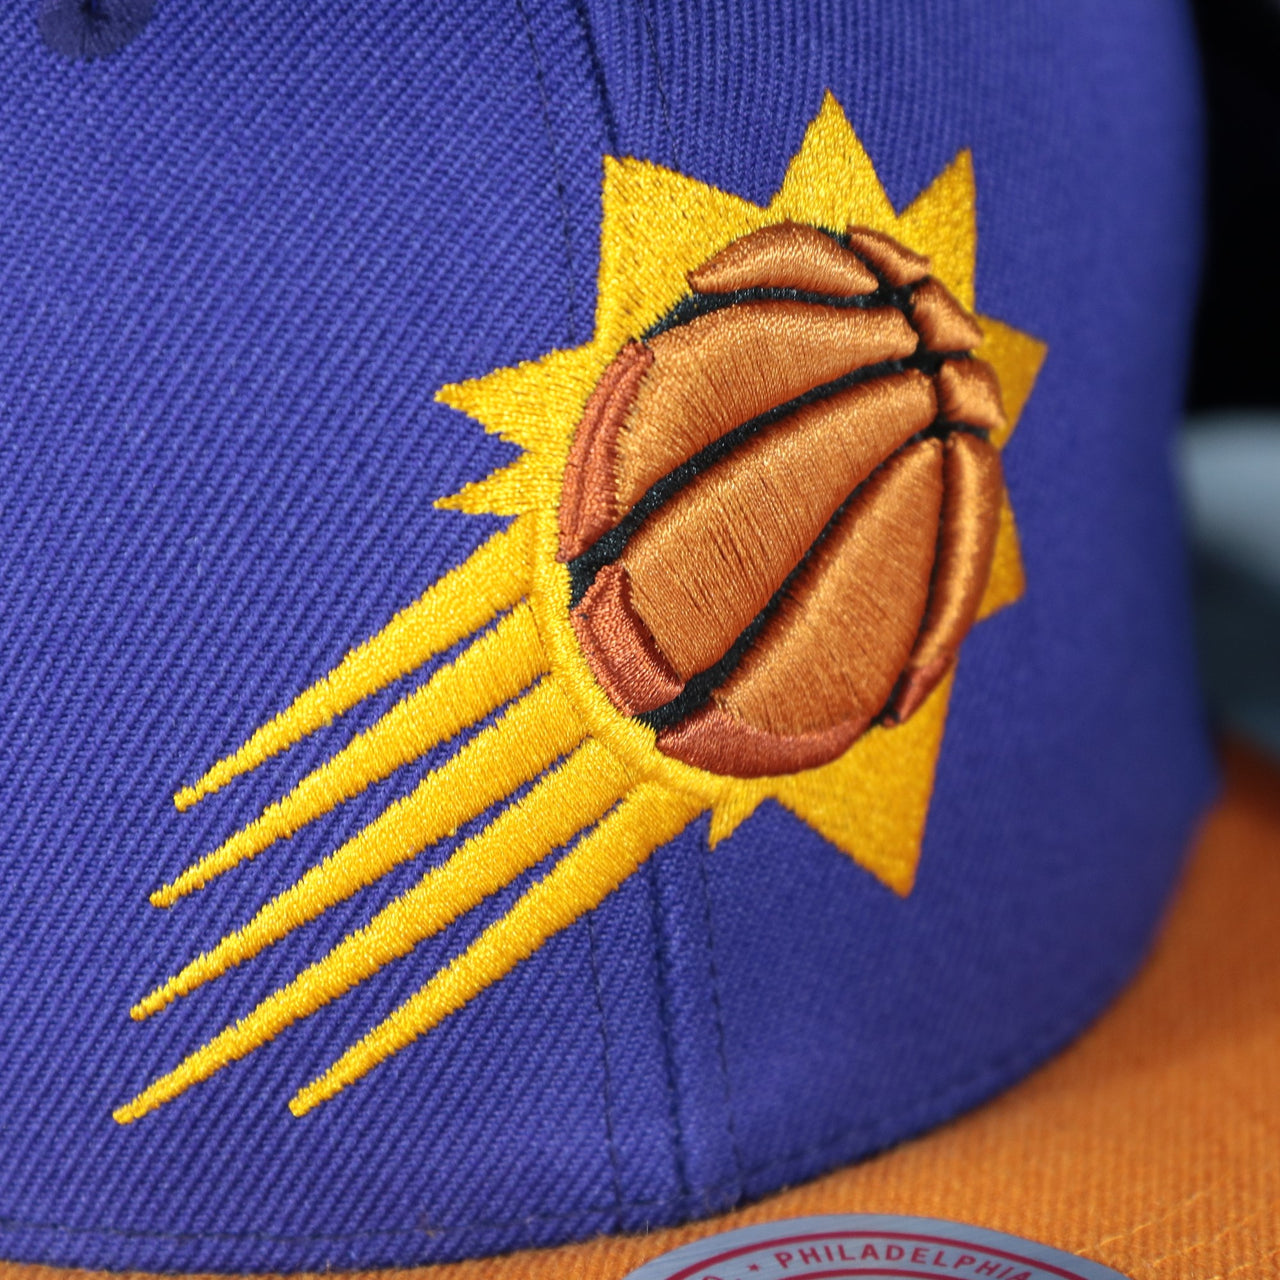 Phoenix Suns NBA Team 2 Tone 2.0 Gray bottom | Purple/Orange Snapback Hat